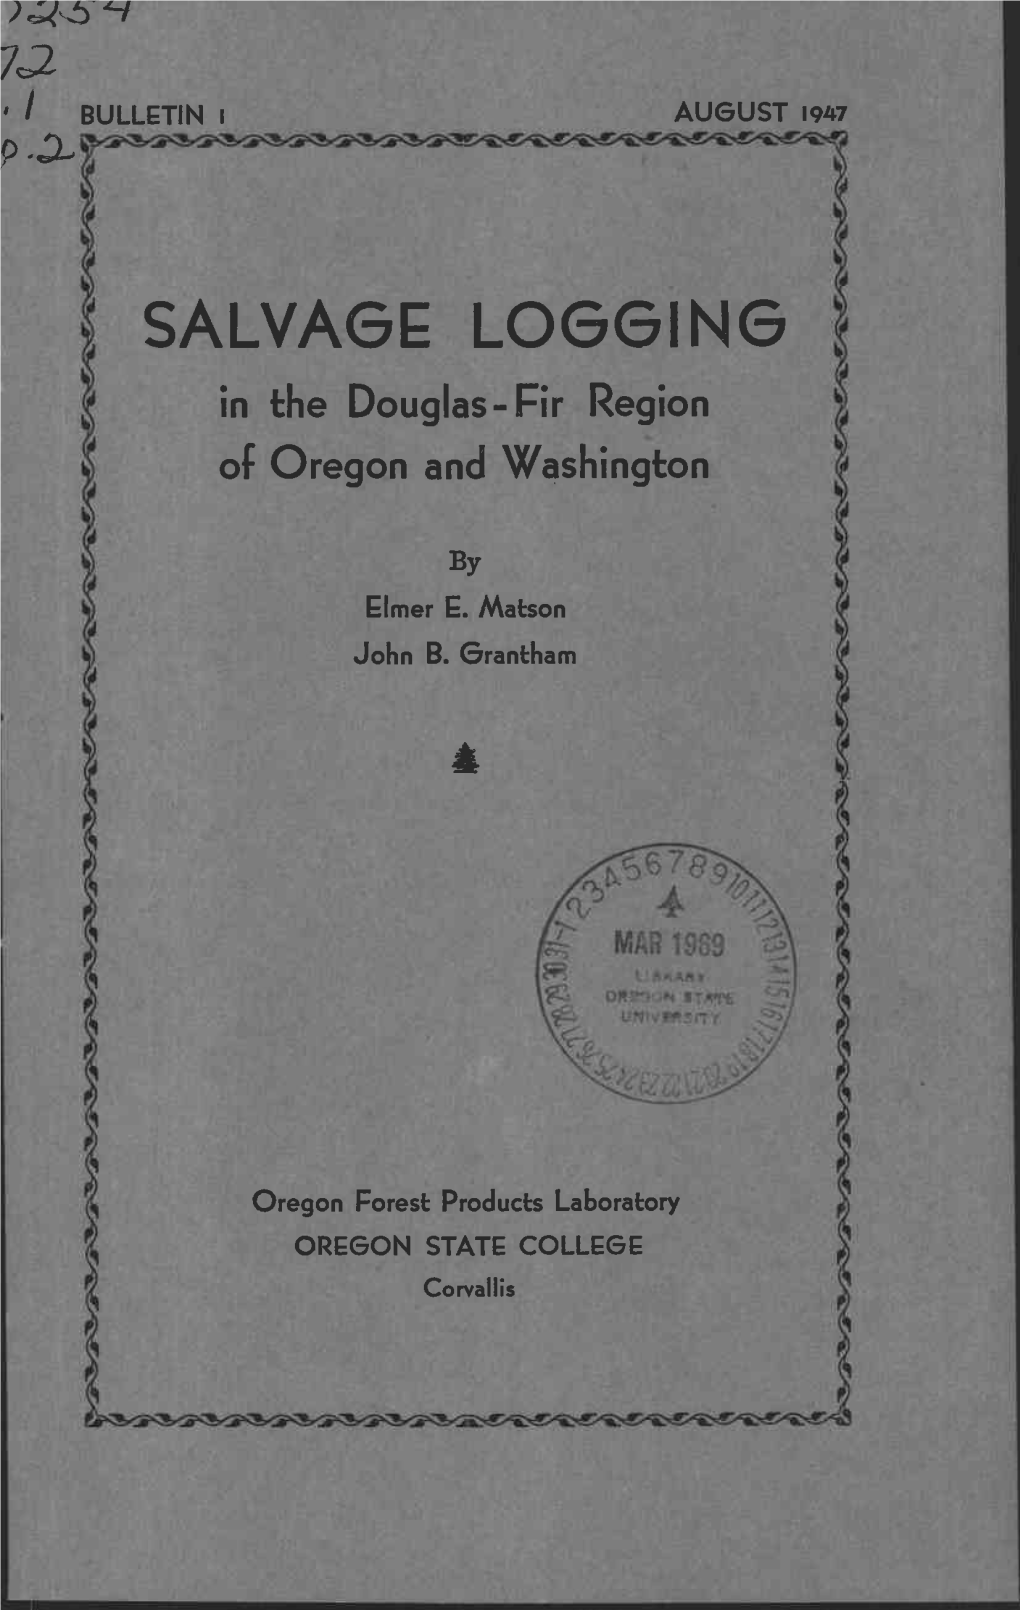 SALVAGE LOGGING in the Douglas-Fir Region of Oregon and Washington